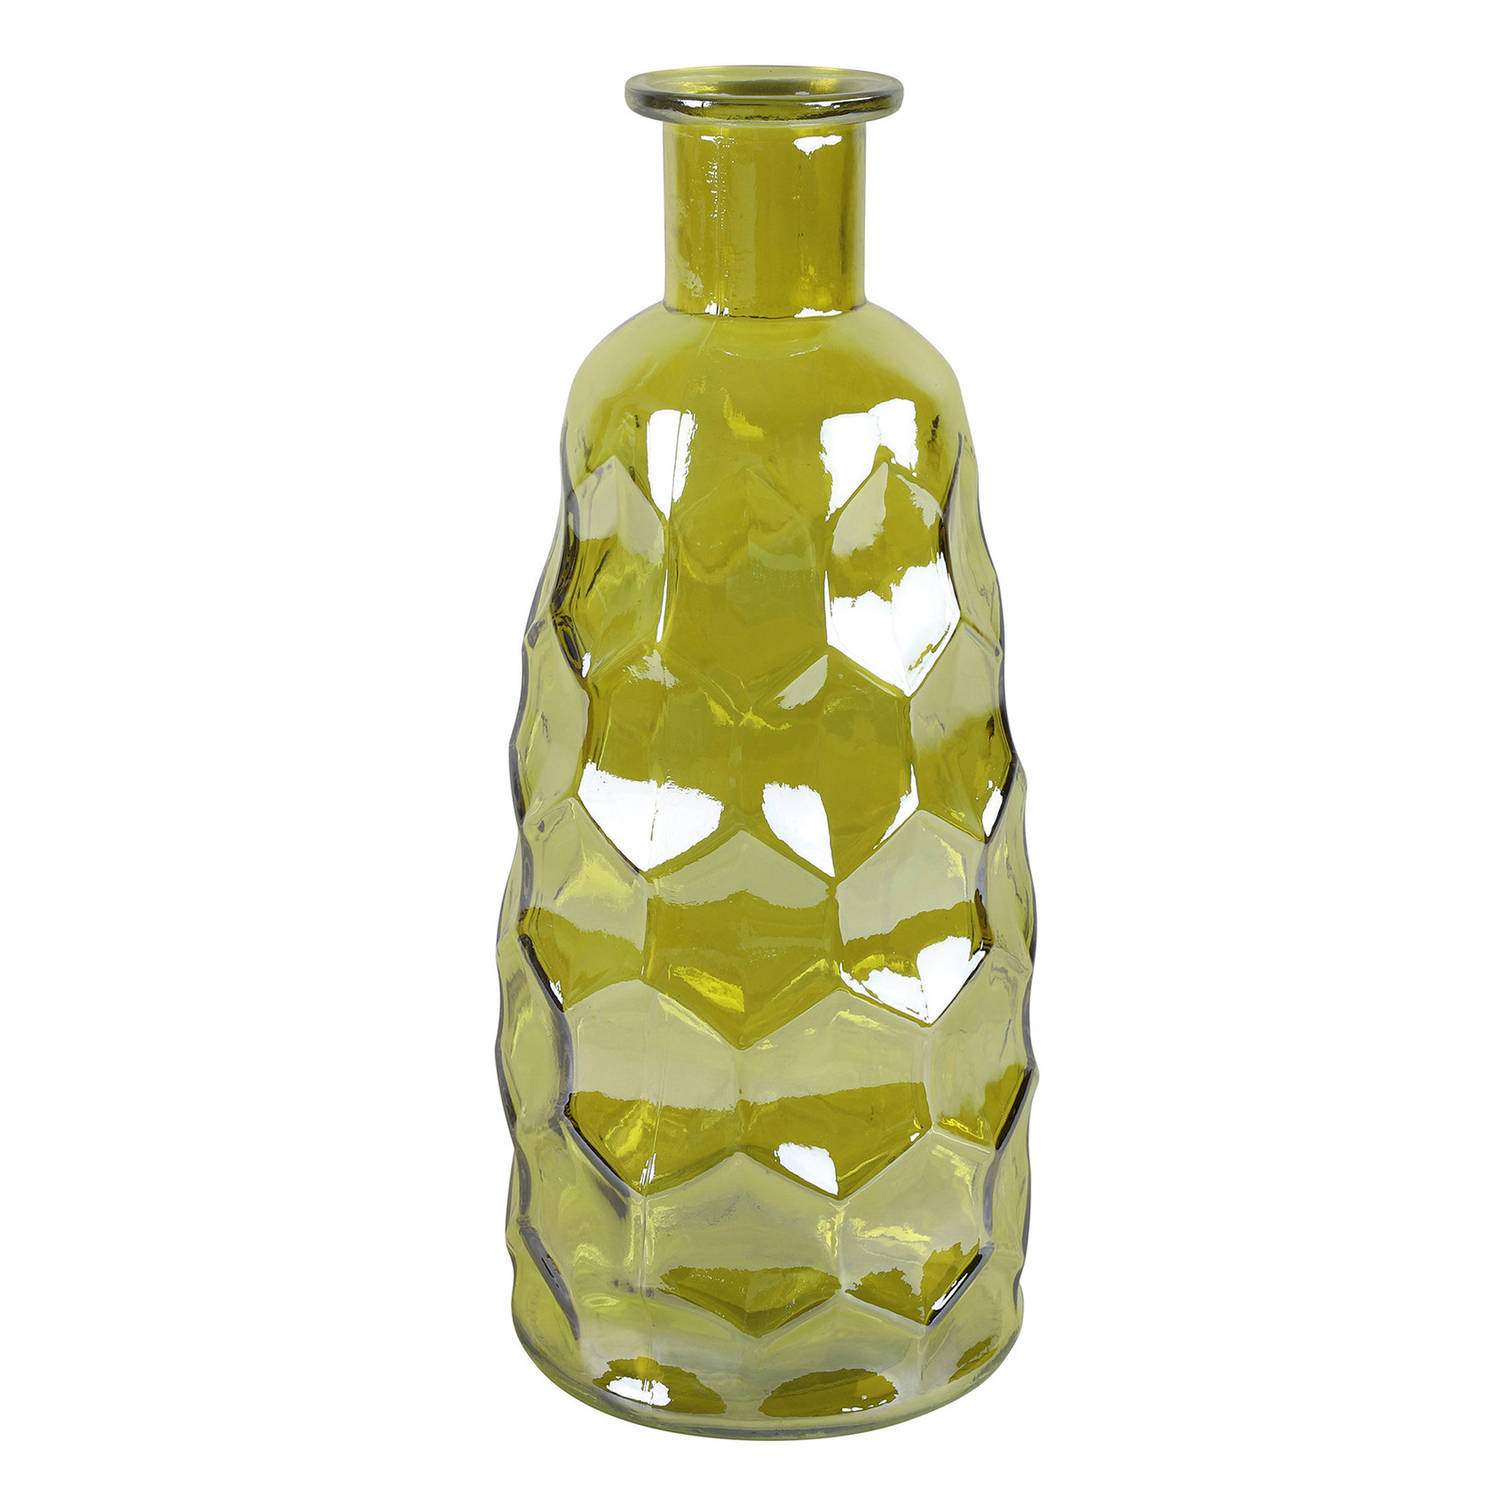 Countryfield Art Deco Bloemenvaas Geel Transparant Glas Fles Vorm D12 X H30 Cm Vazen